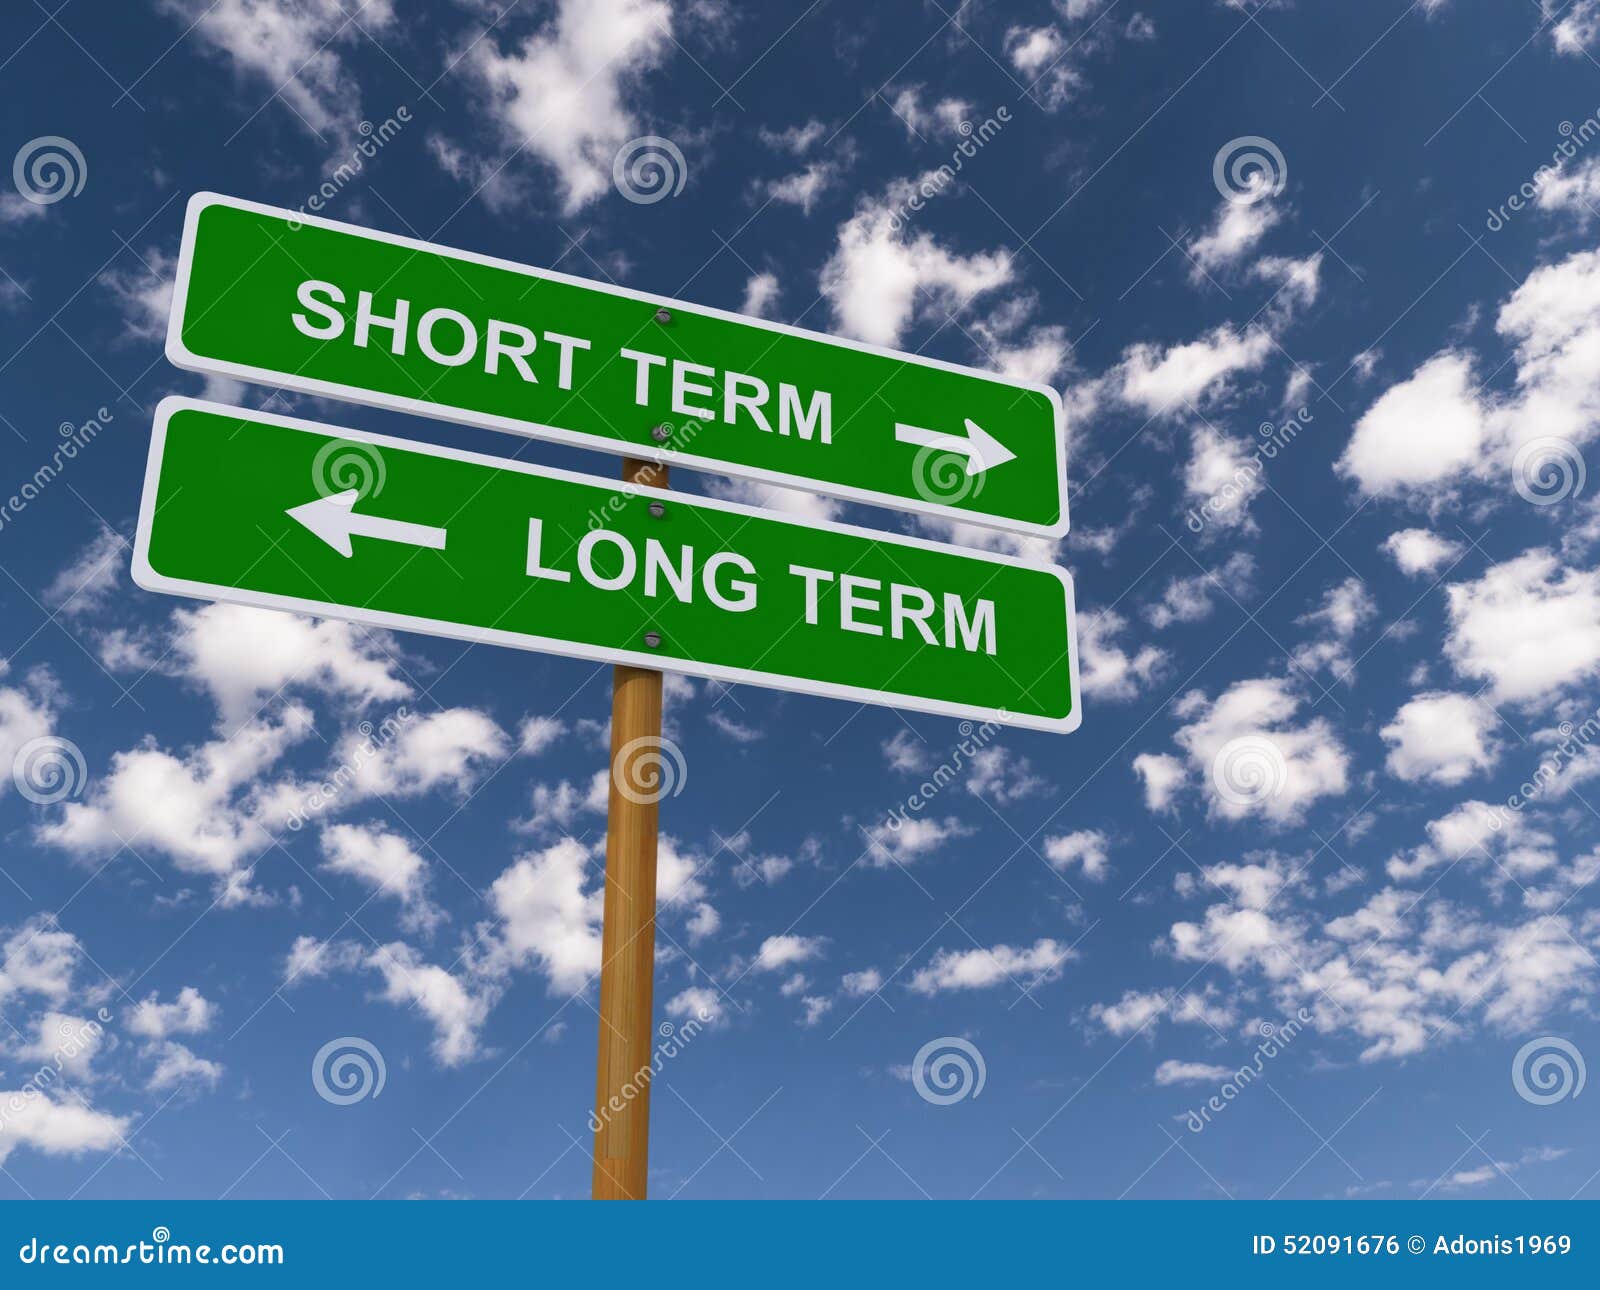 short term vs. long term